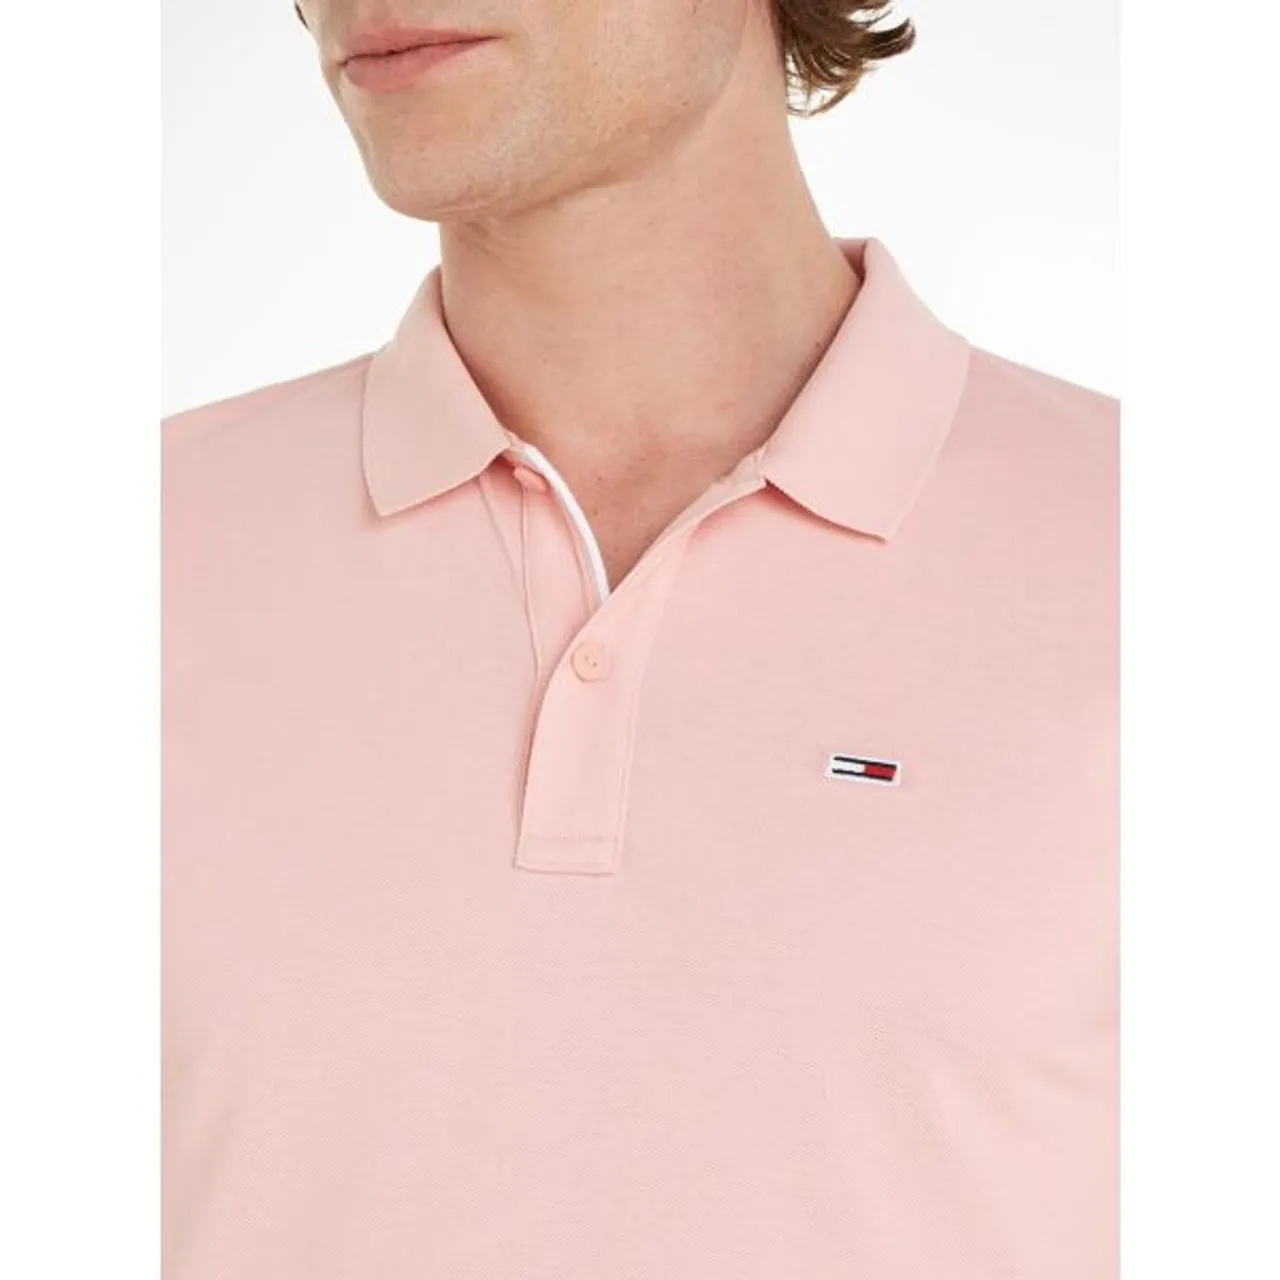 Poloshirt TOMMY JEANS "TJM SLIM PLACKET POLO" Gr. XXL, pink (ballet pin) Herren Shirts Kurzarm Piqué mit Polokragen